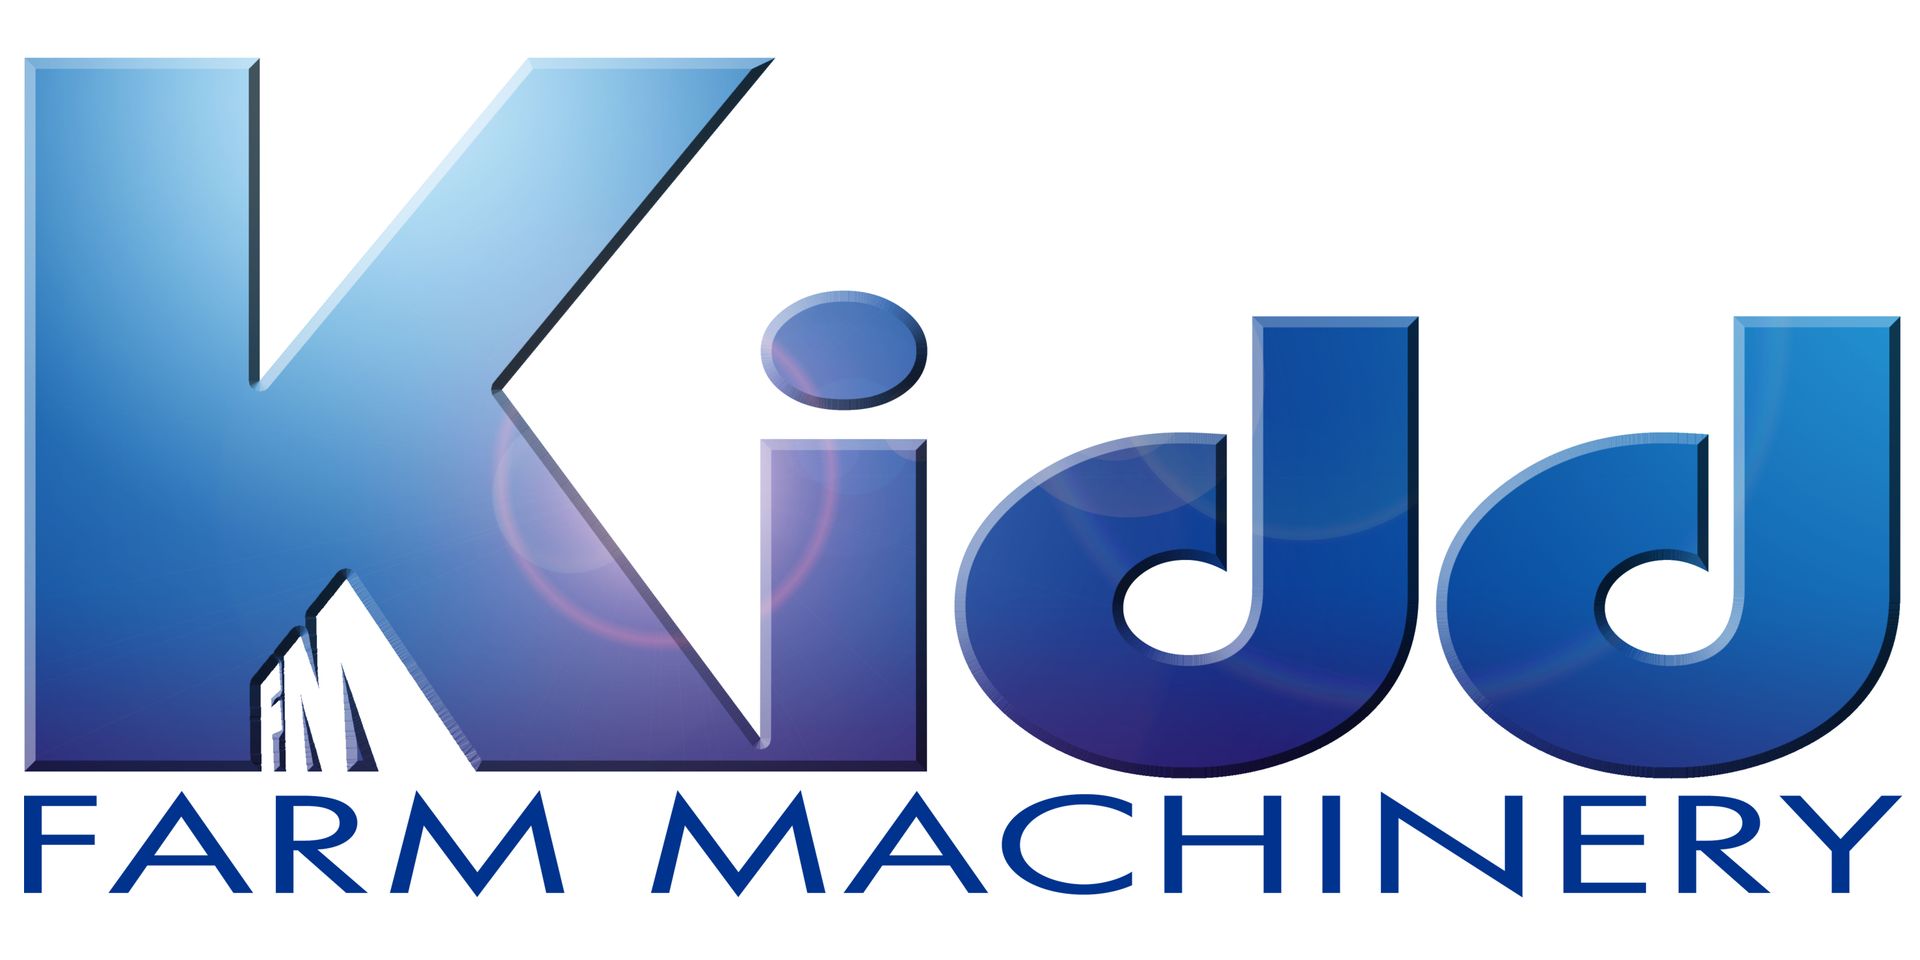 Kidd Farm Machinary logo